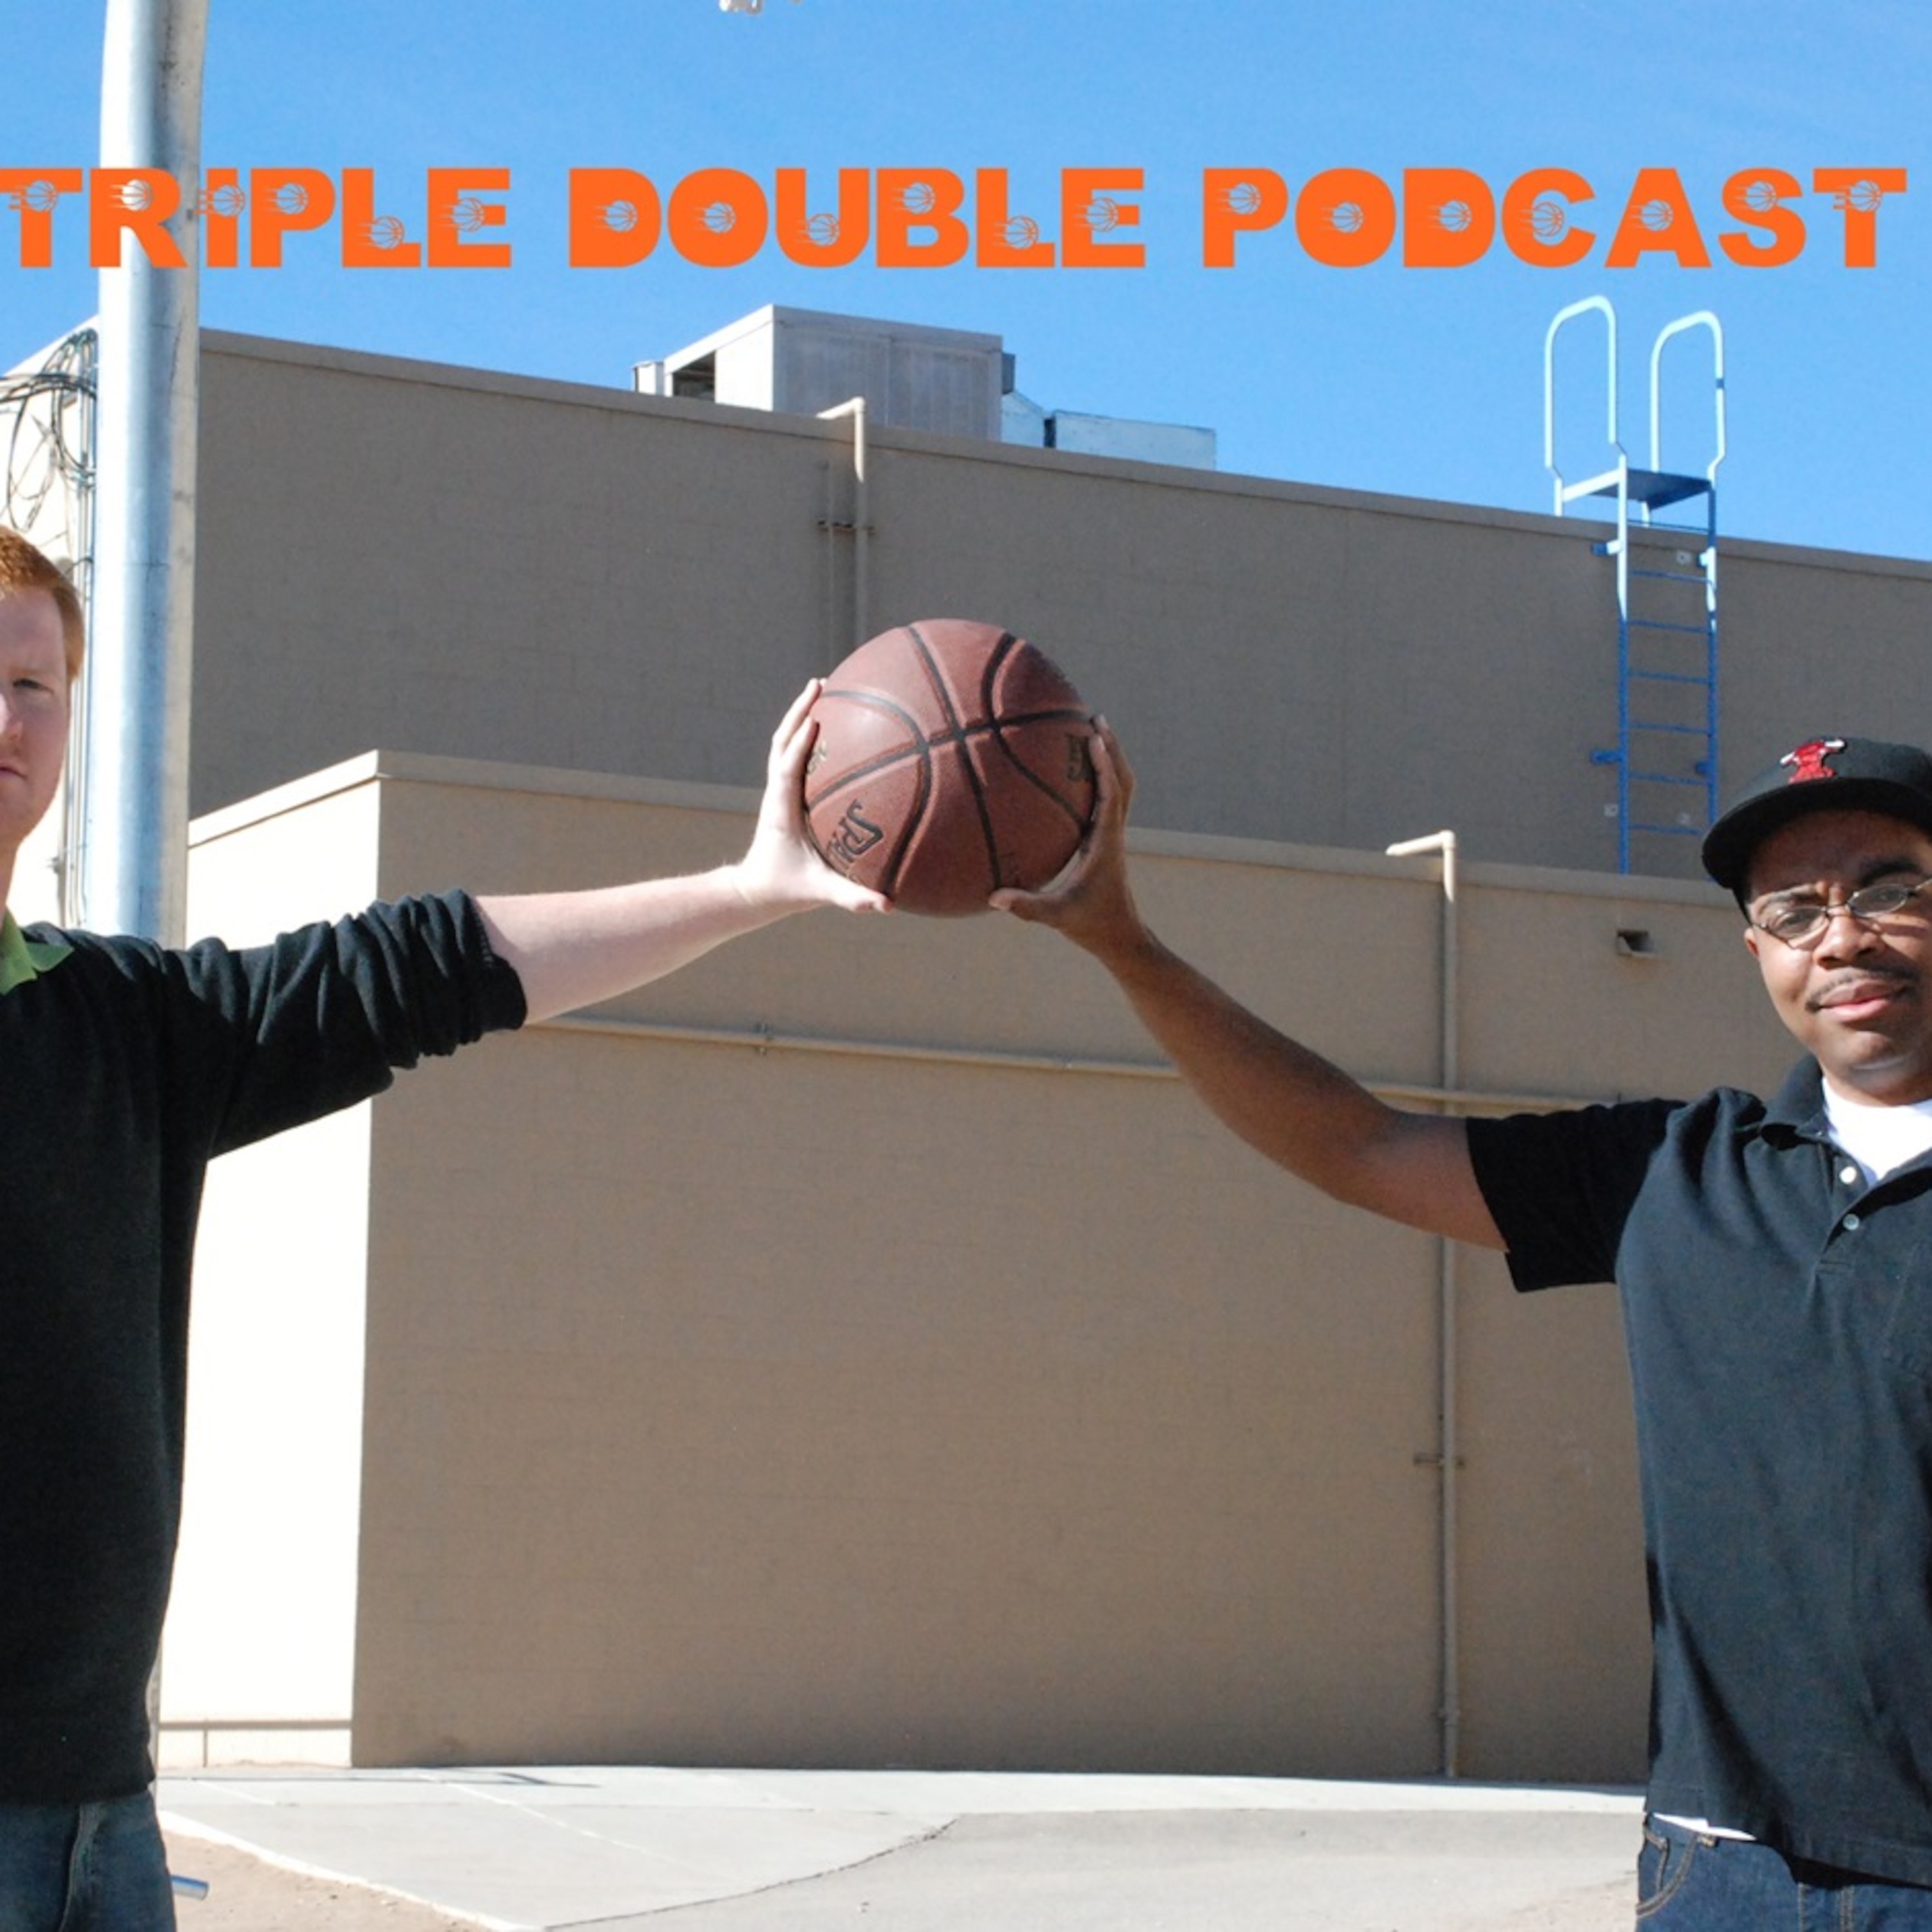 Triple Double Podcast